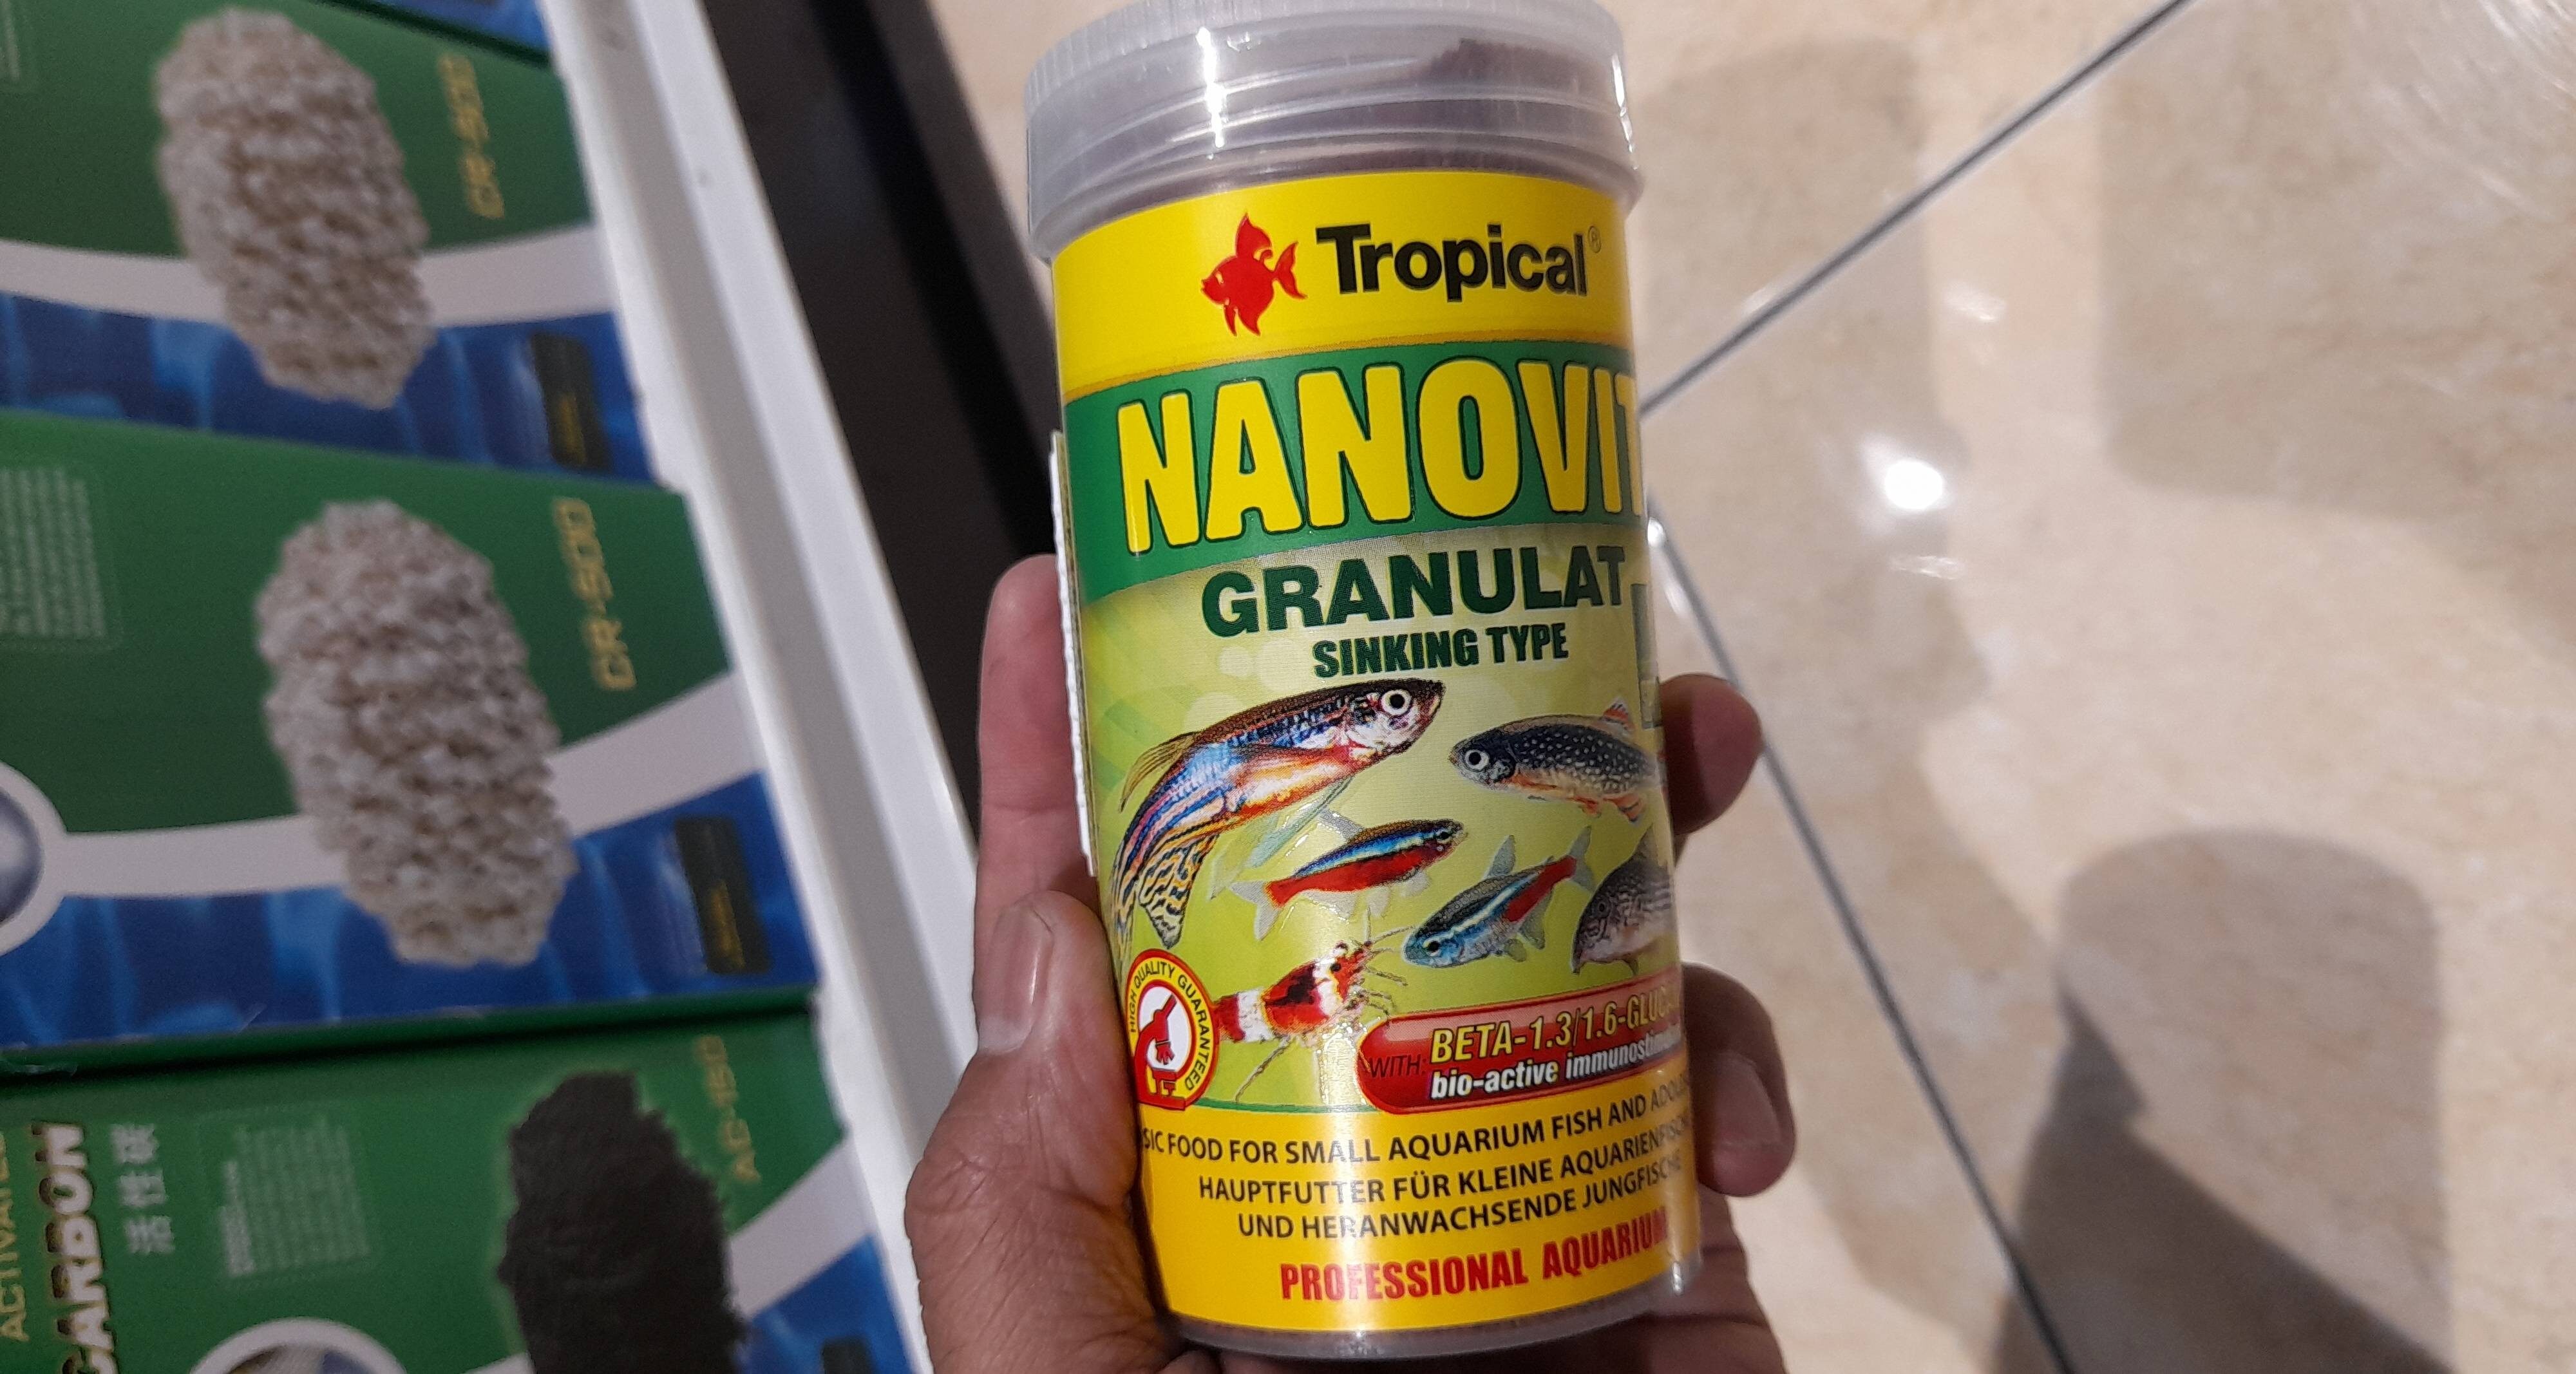 Tropical Nanovit granulat 250ml - Product - en